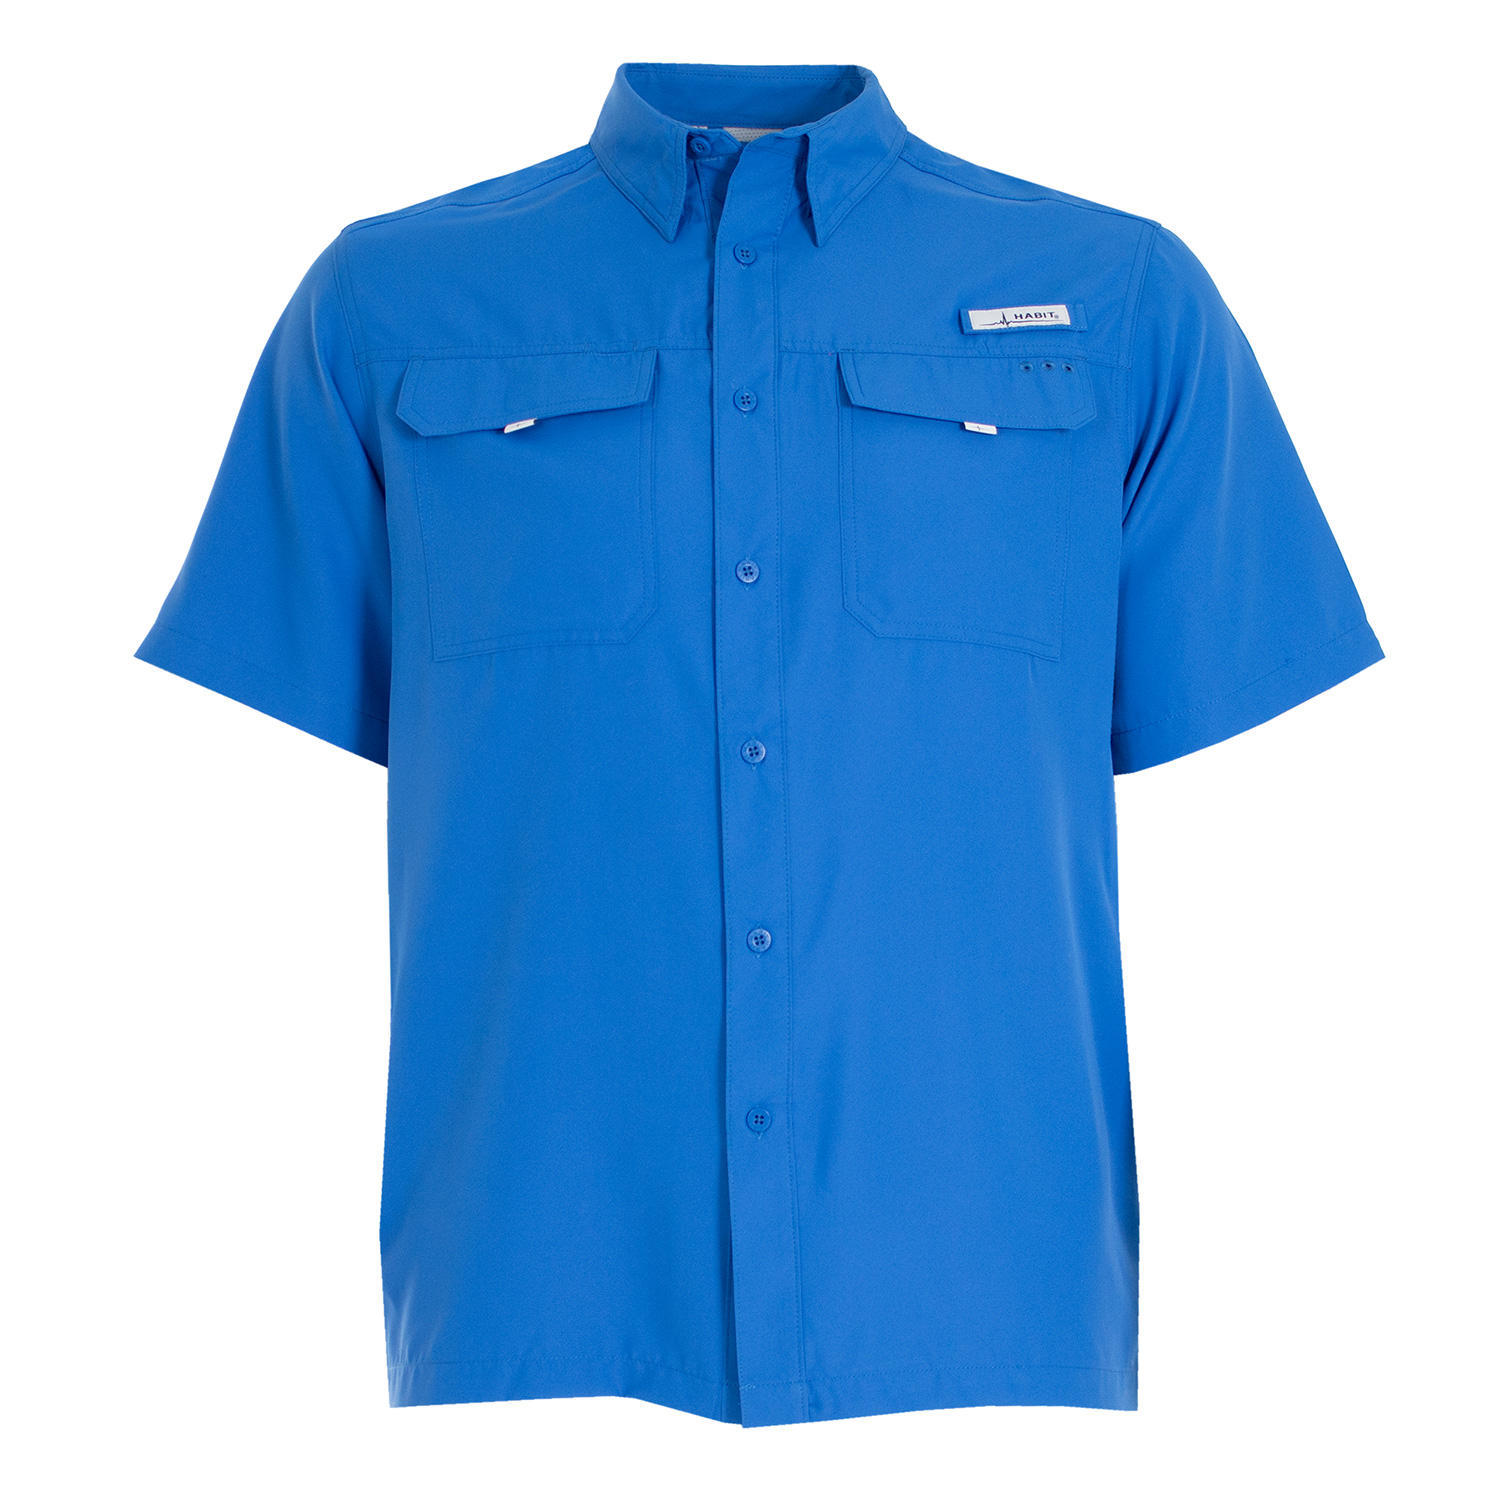 Habit Men's UPF 40+ UV Protection Short-Sleeve Fishing Shirt - Nautical Blue M